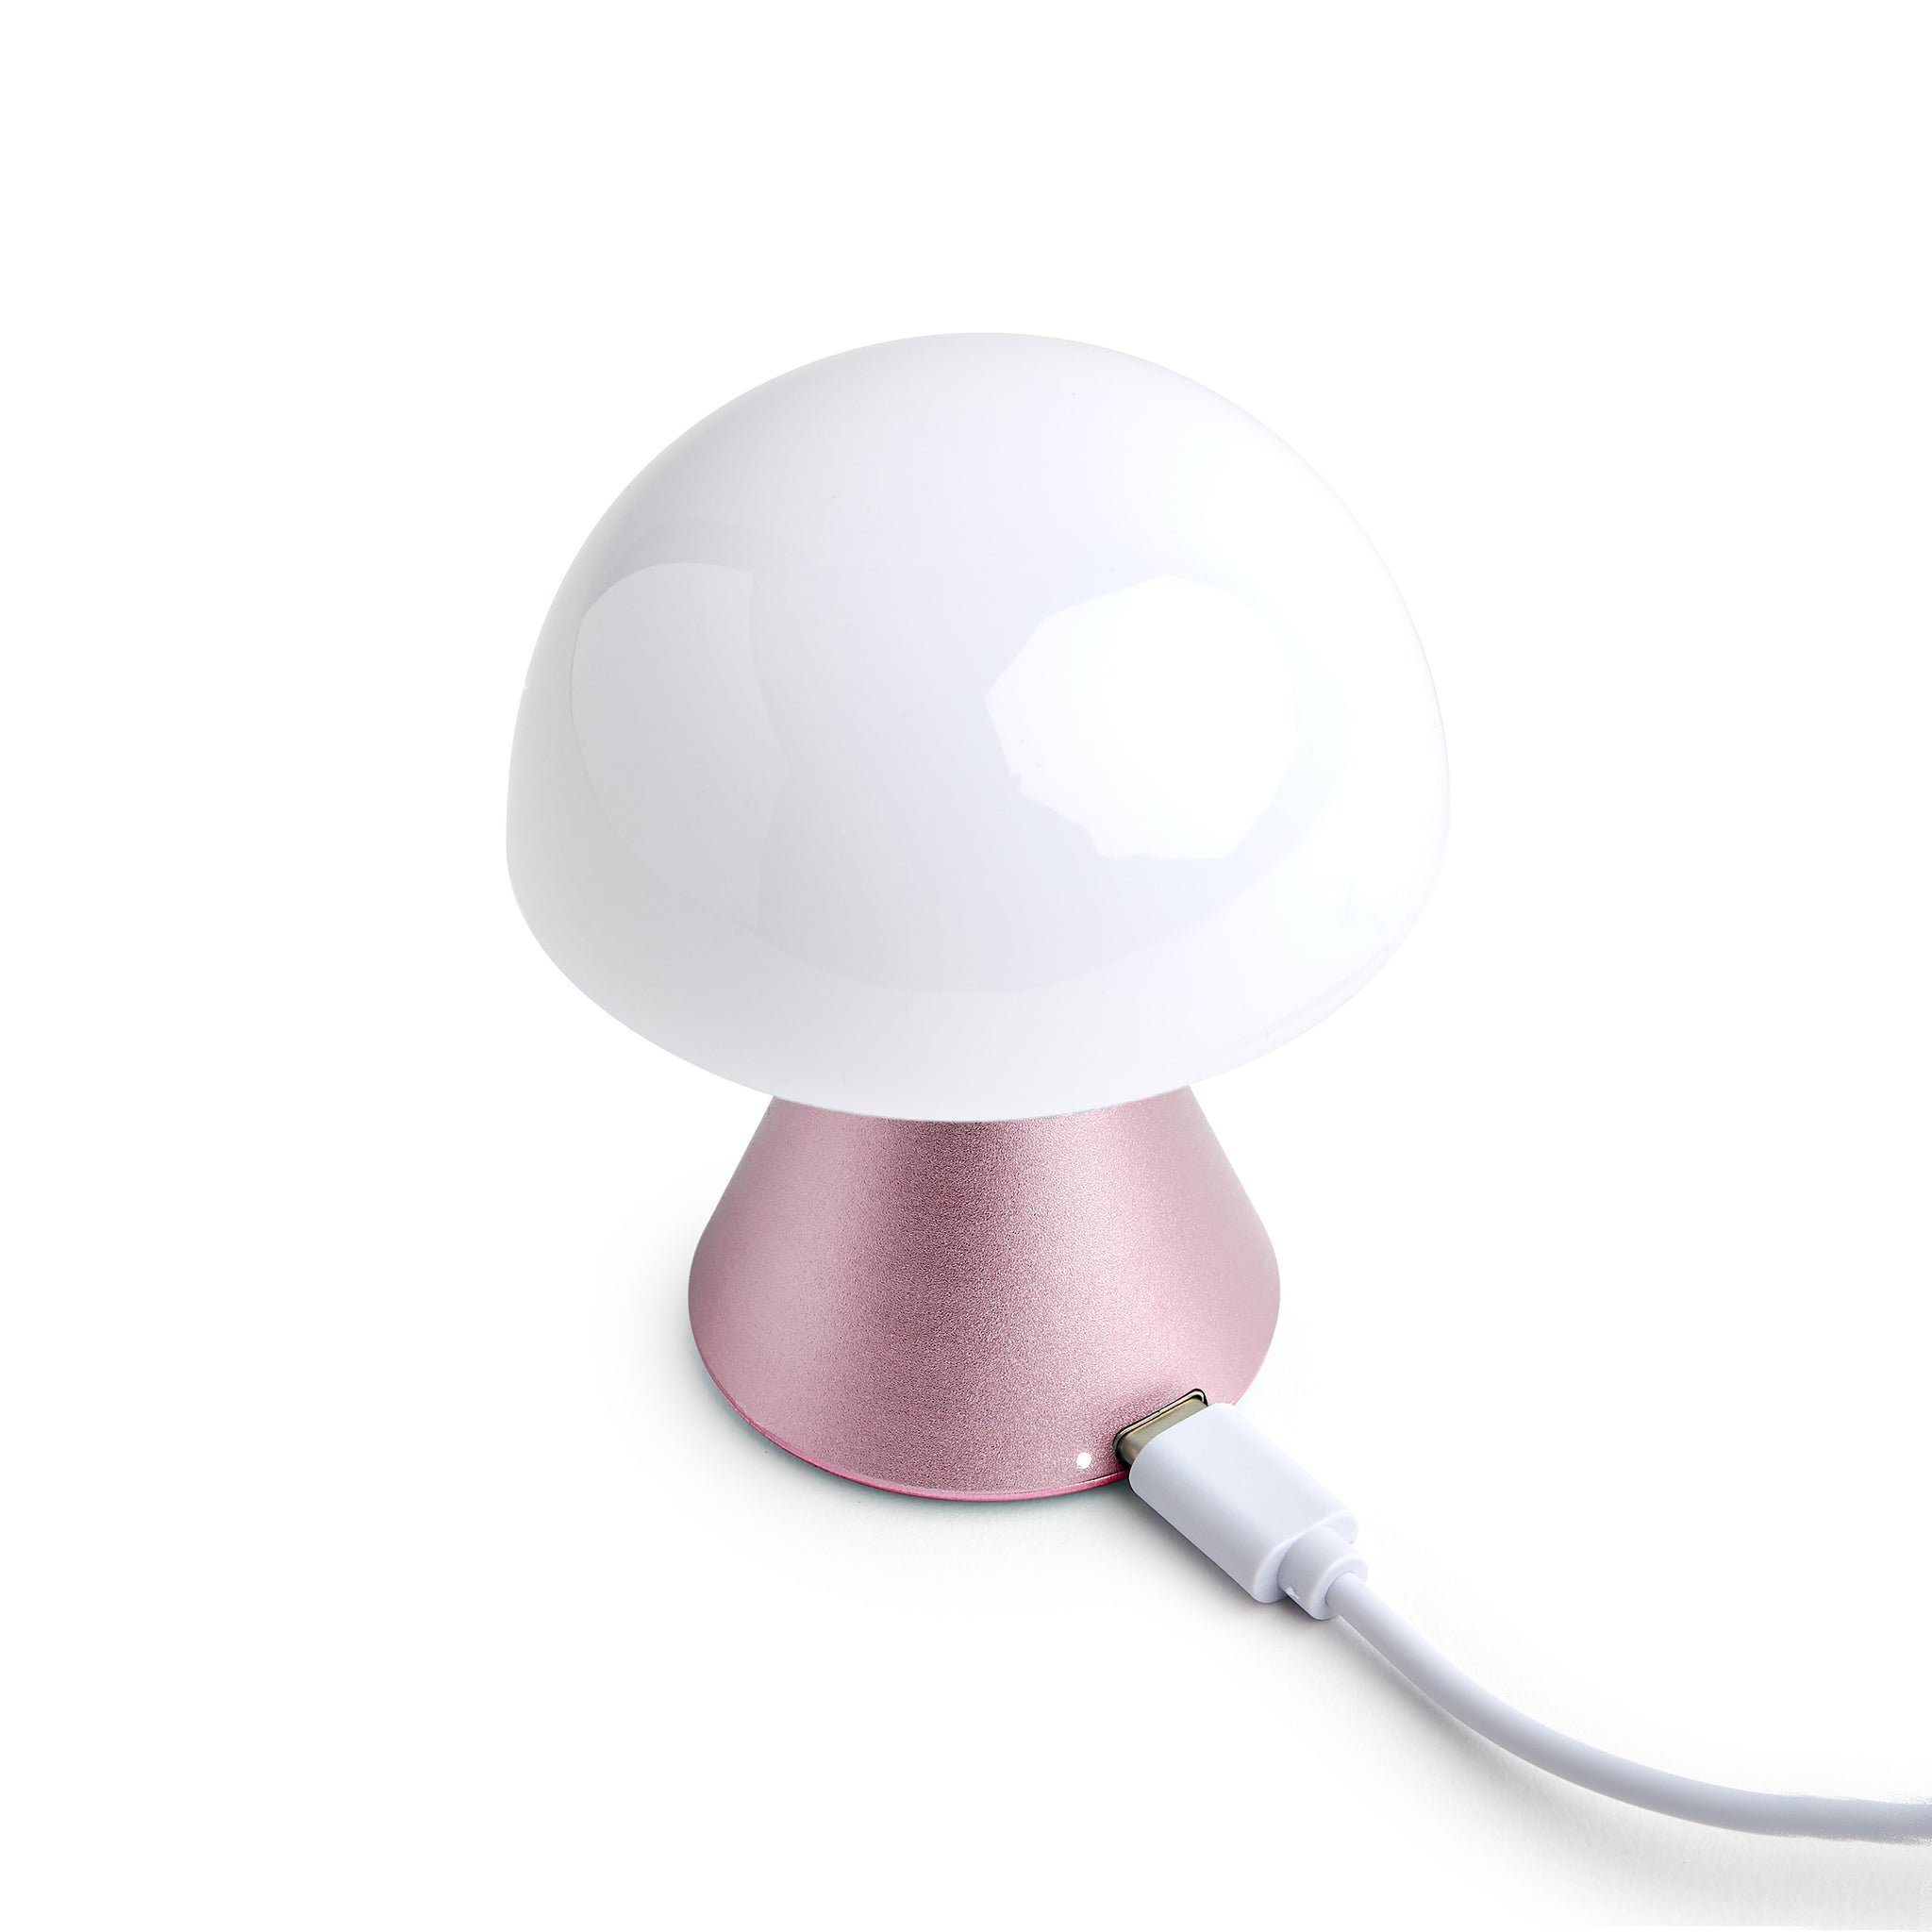 Lexon Mina Small Roze│Oplaadbare LED lamp│art. LH60MLP│met USB-kabel in oplader